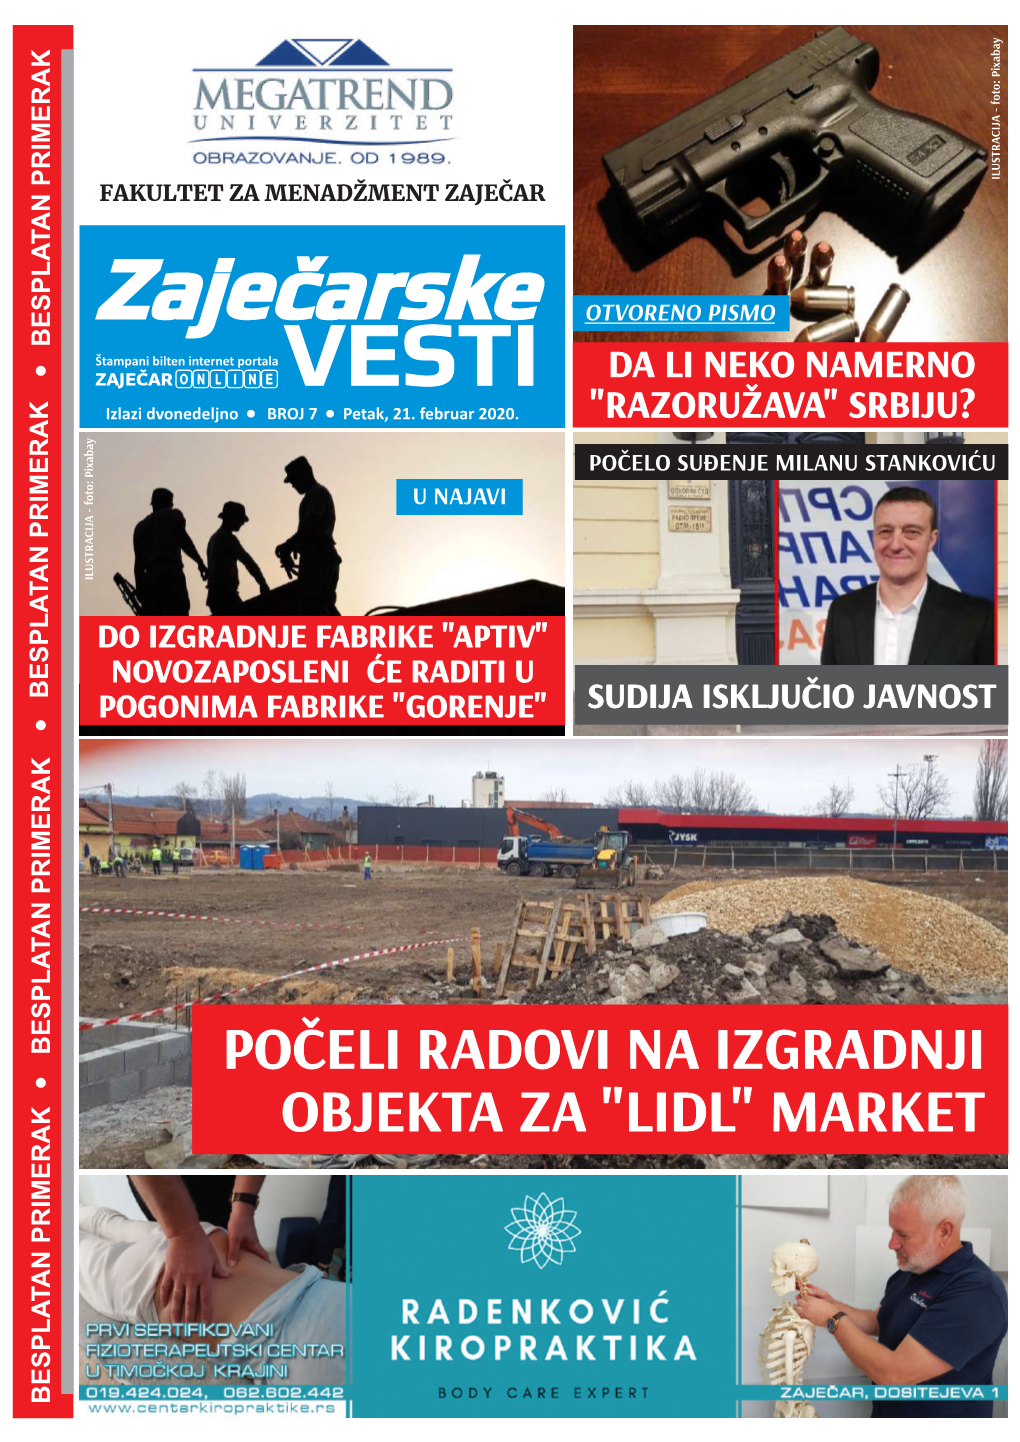 Počeli Radovi Na Izgradnji Objekta Za "Lidl" Market an Primerak T Bespla 2 21.02.2020